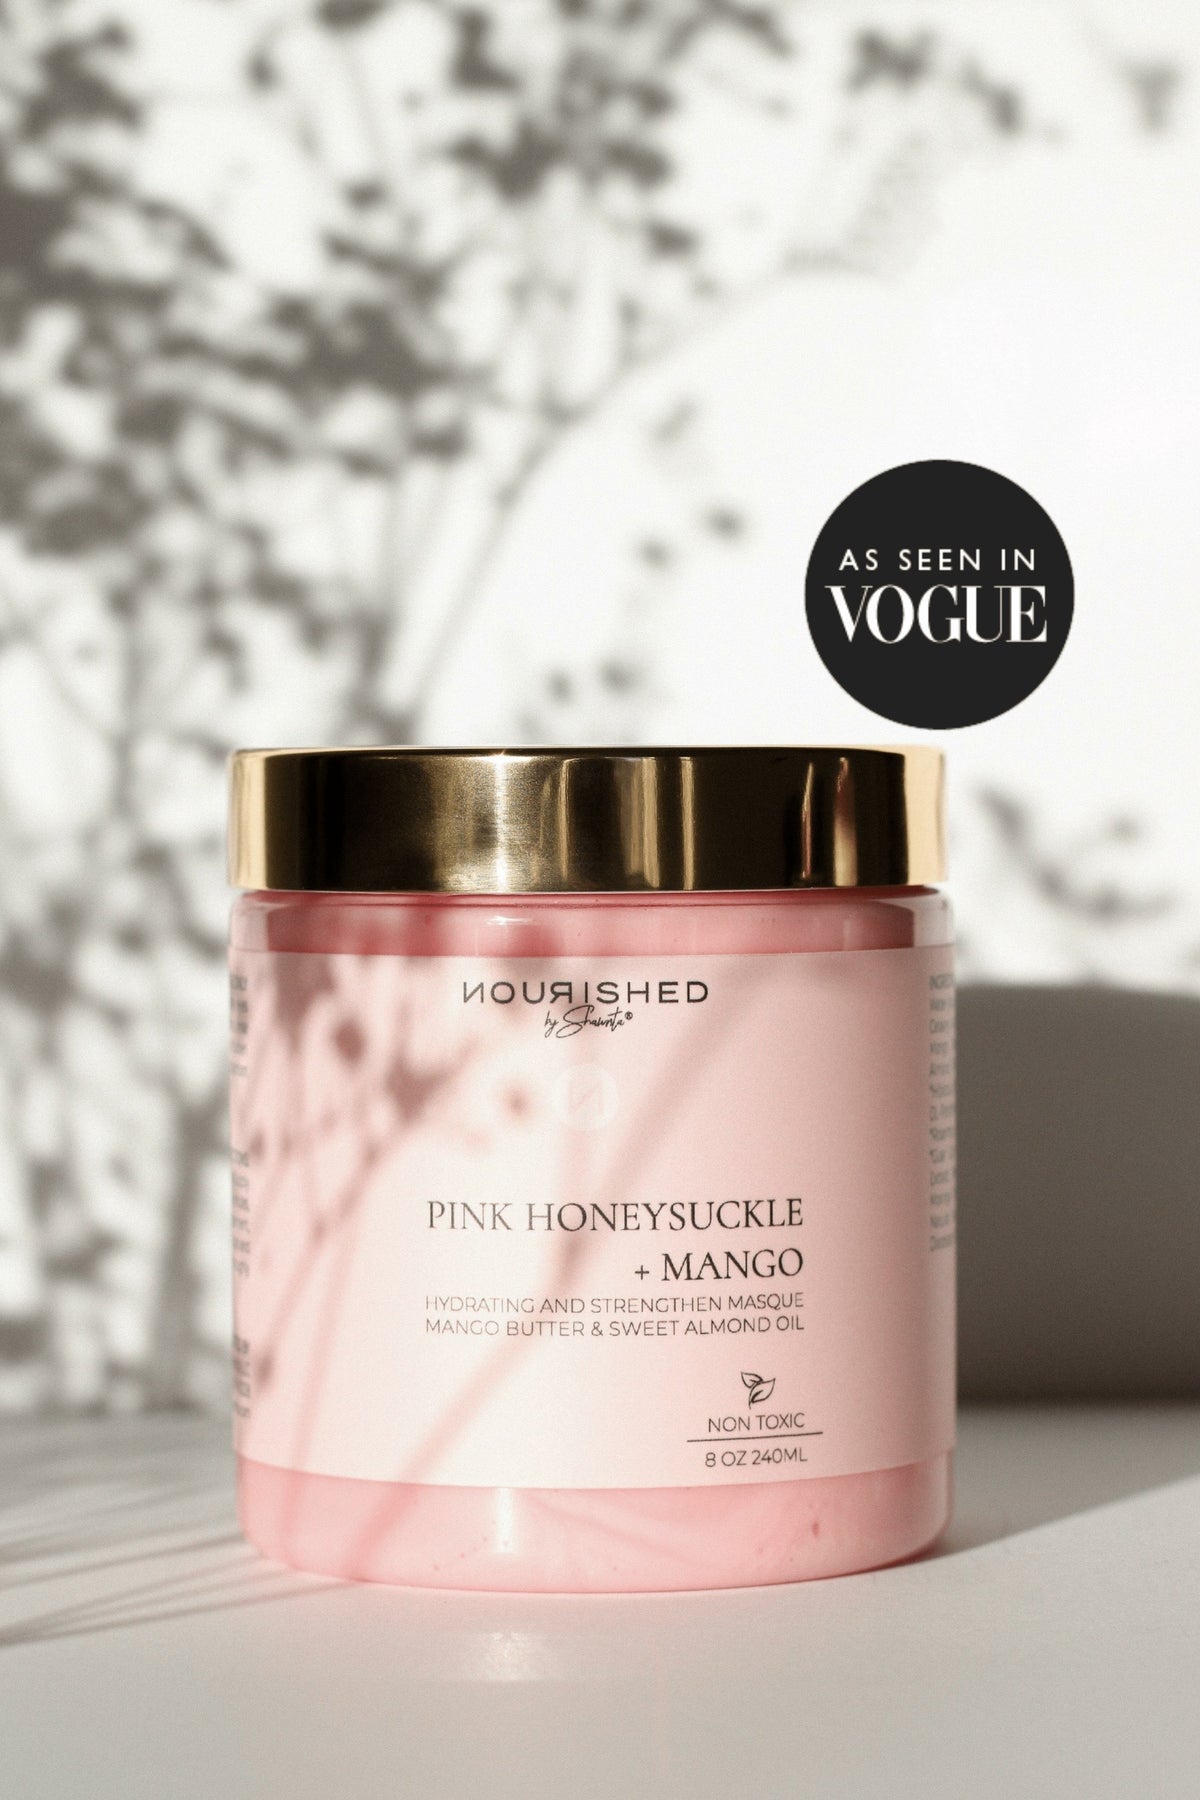 Pink Honeysuckle + Mango Hydrating & Strengthen Masque